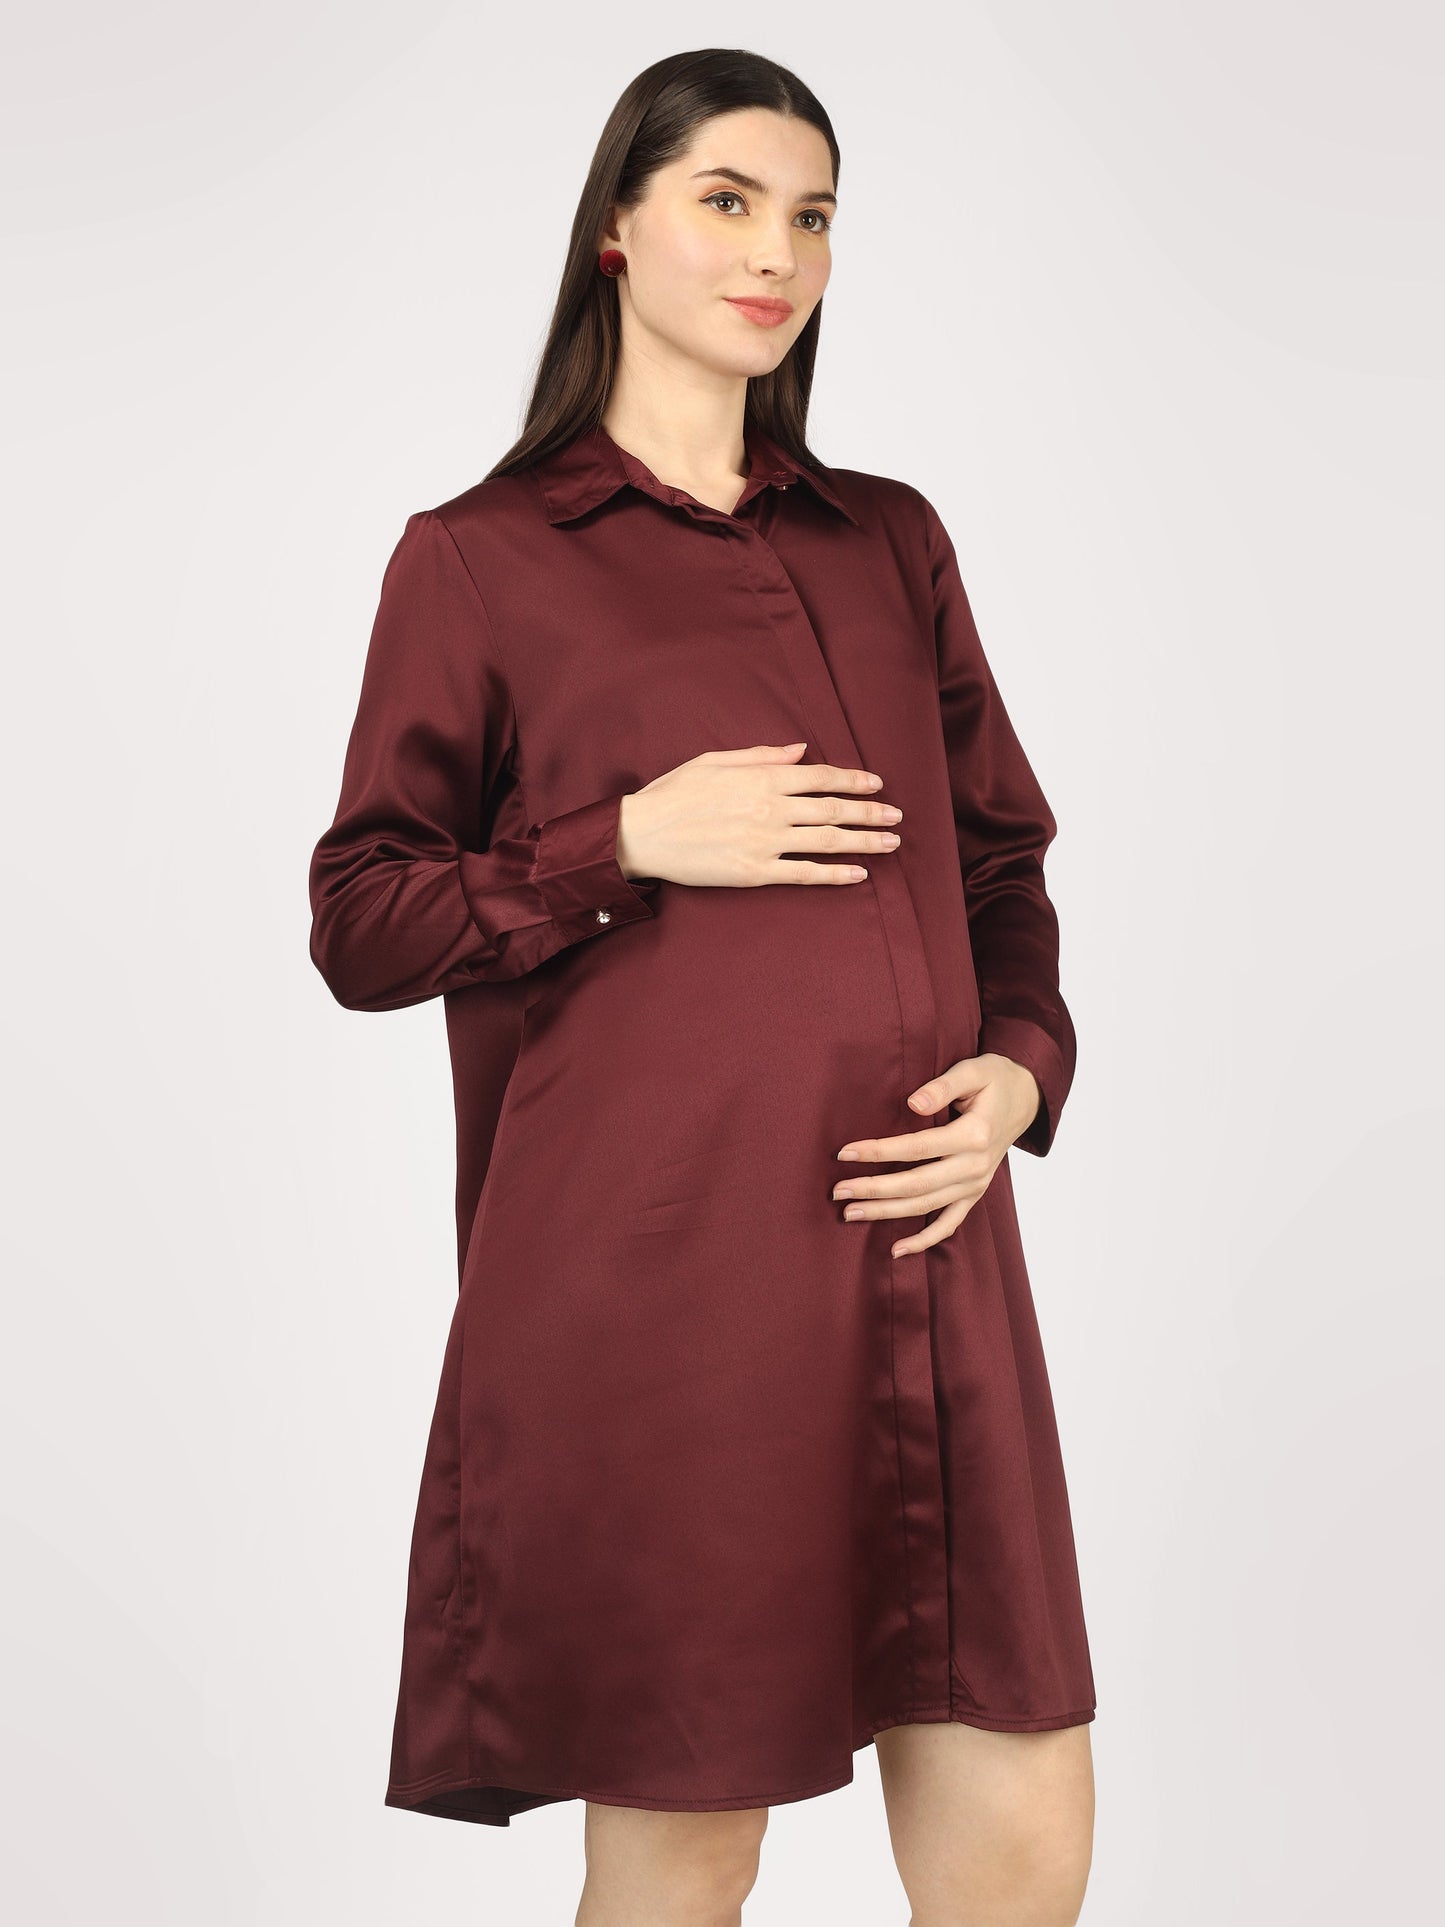 Burgundy Satin Shirt - Luxury Maternity Dress